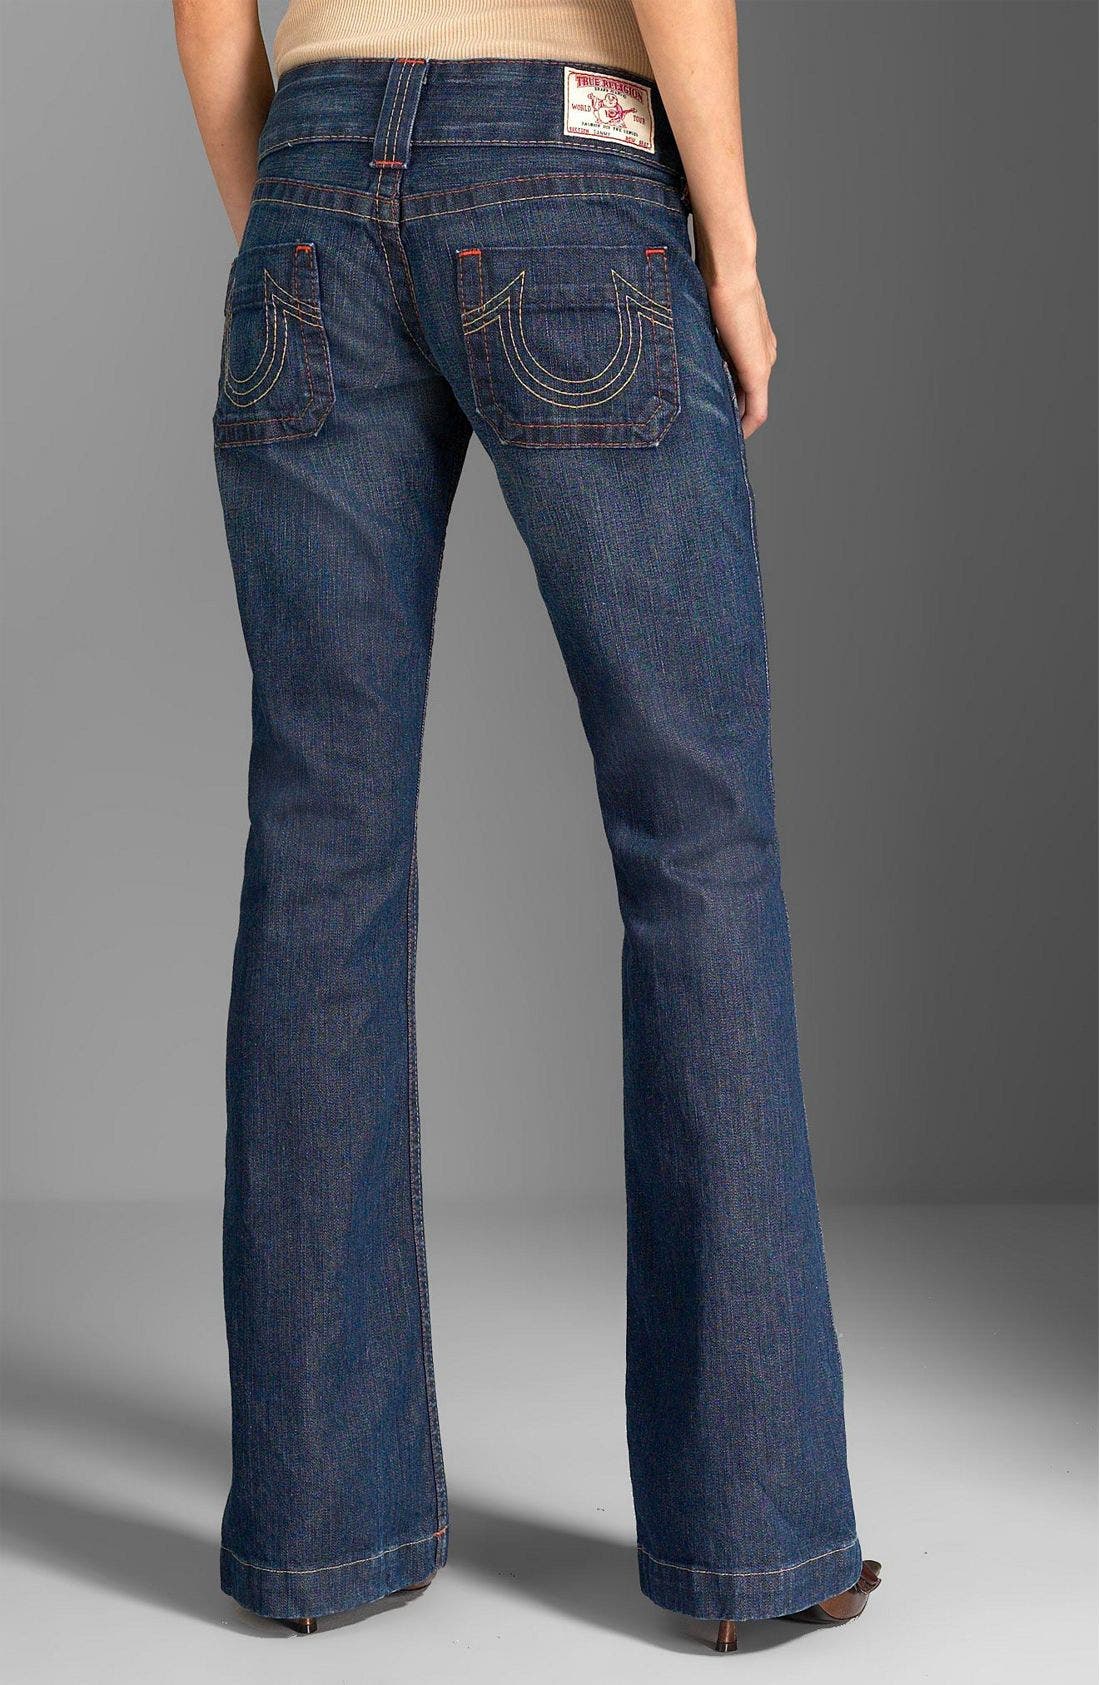 True Religion Brand Jeans 'Sammy' Rigid 